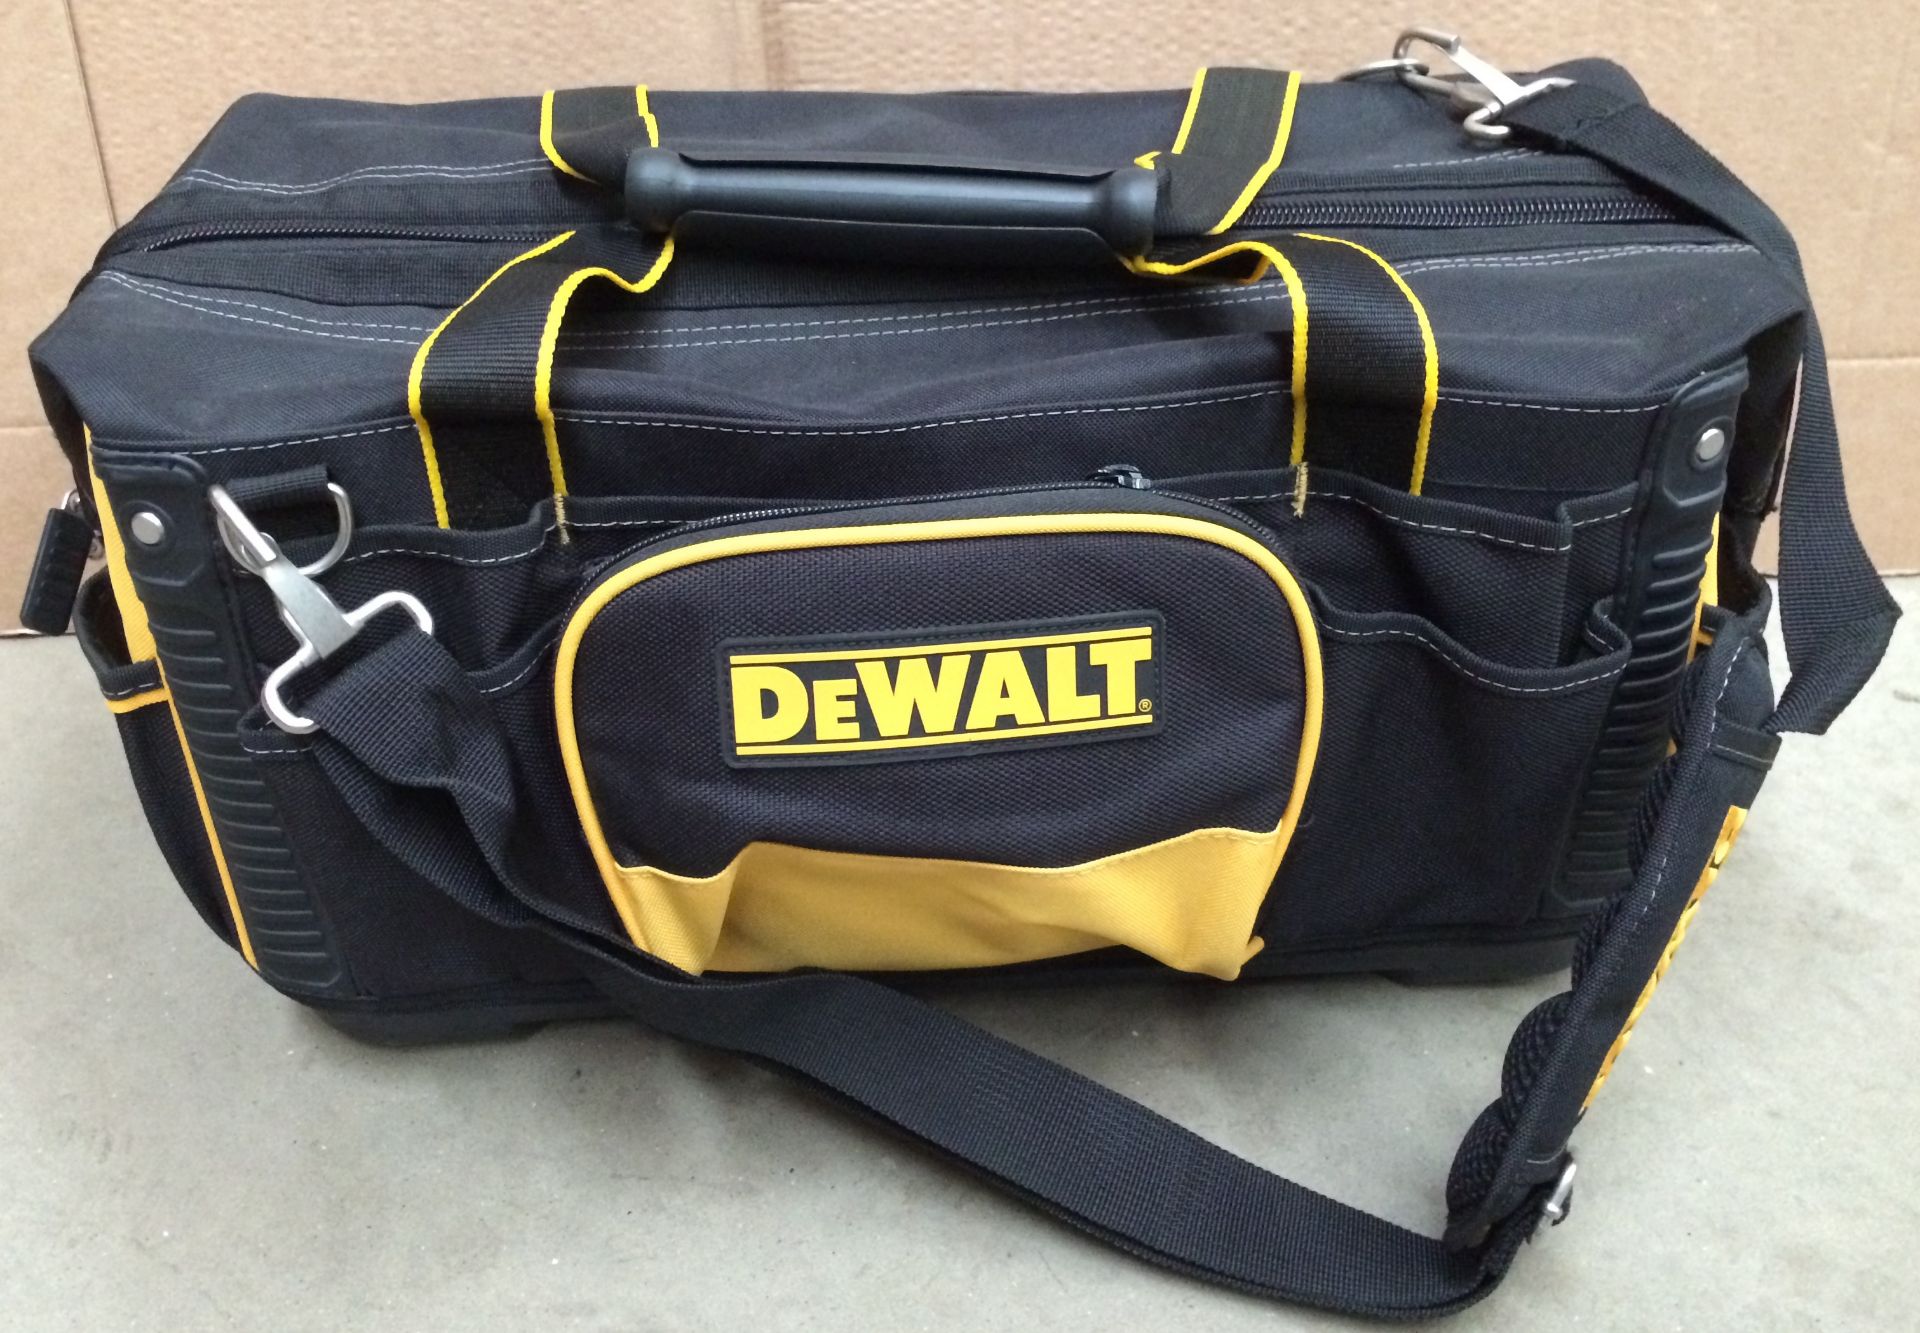 DeWalt multi section tool bag